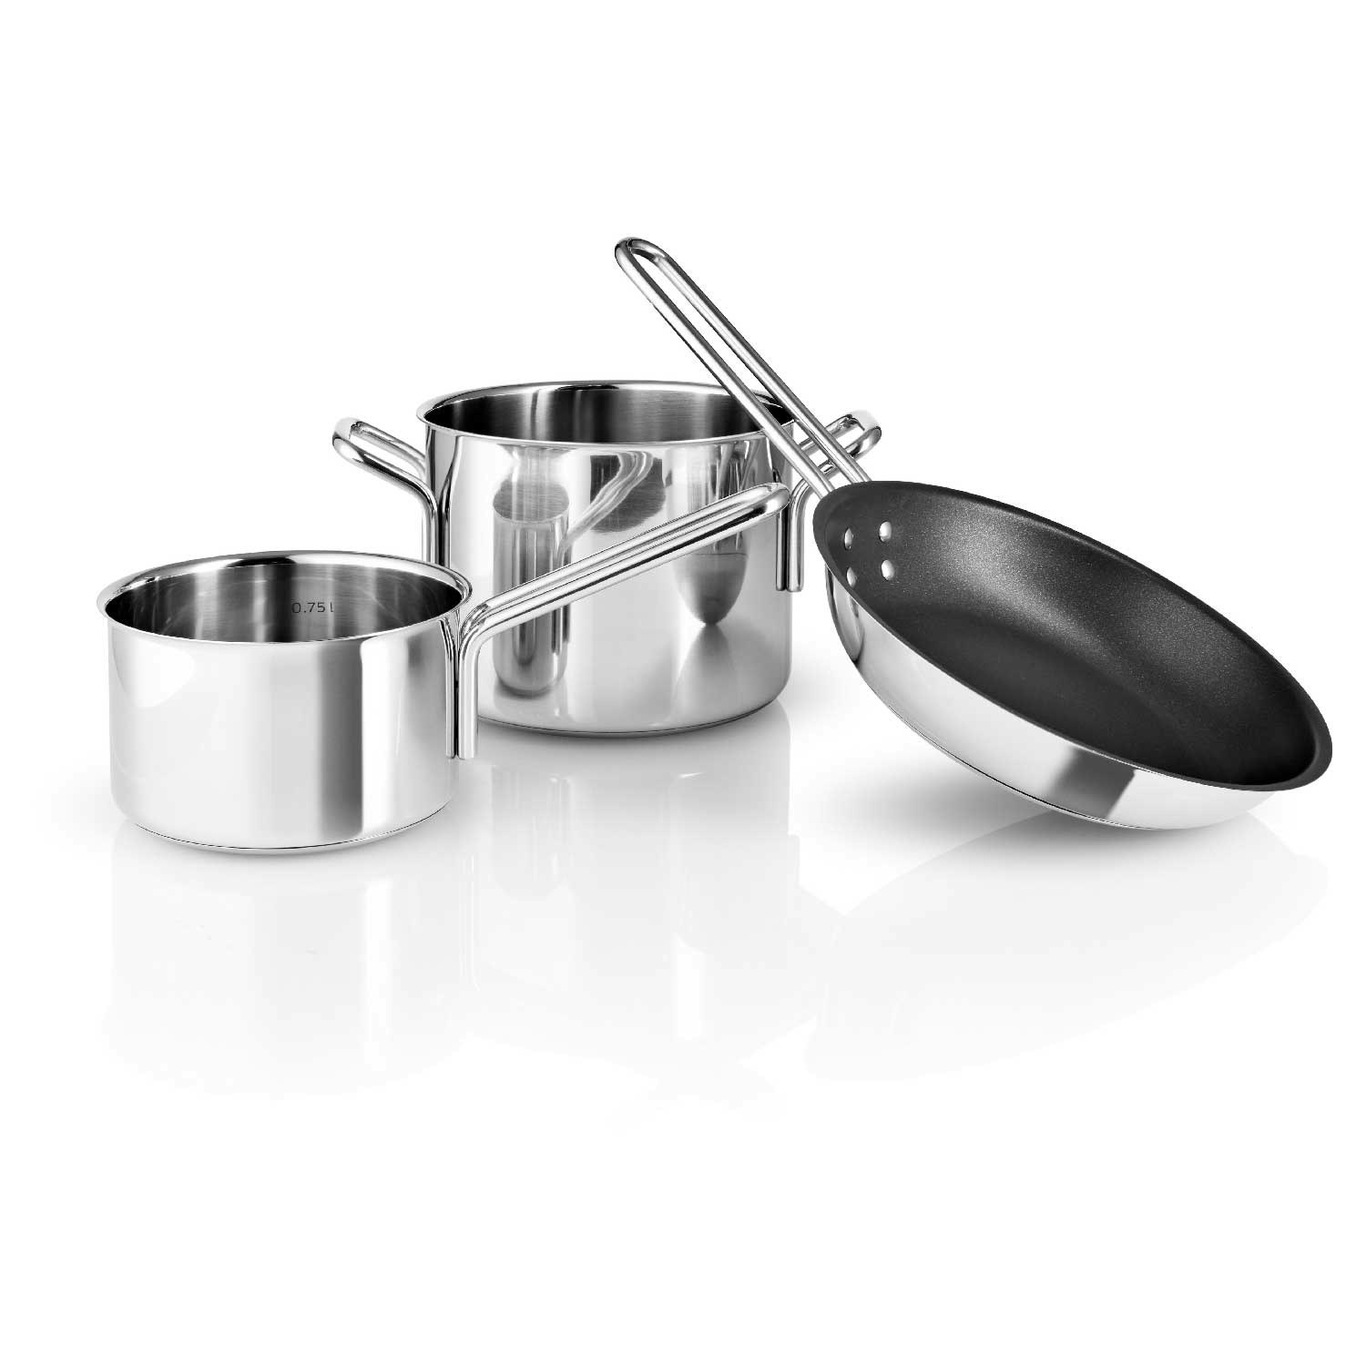 https://royaldesign.com/image/2/eva-solo-start-set-sauce-pan-frying-pan-3-pcs-0?w=800&quality=80